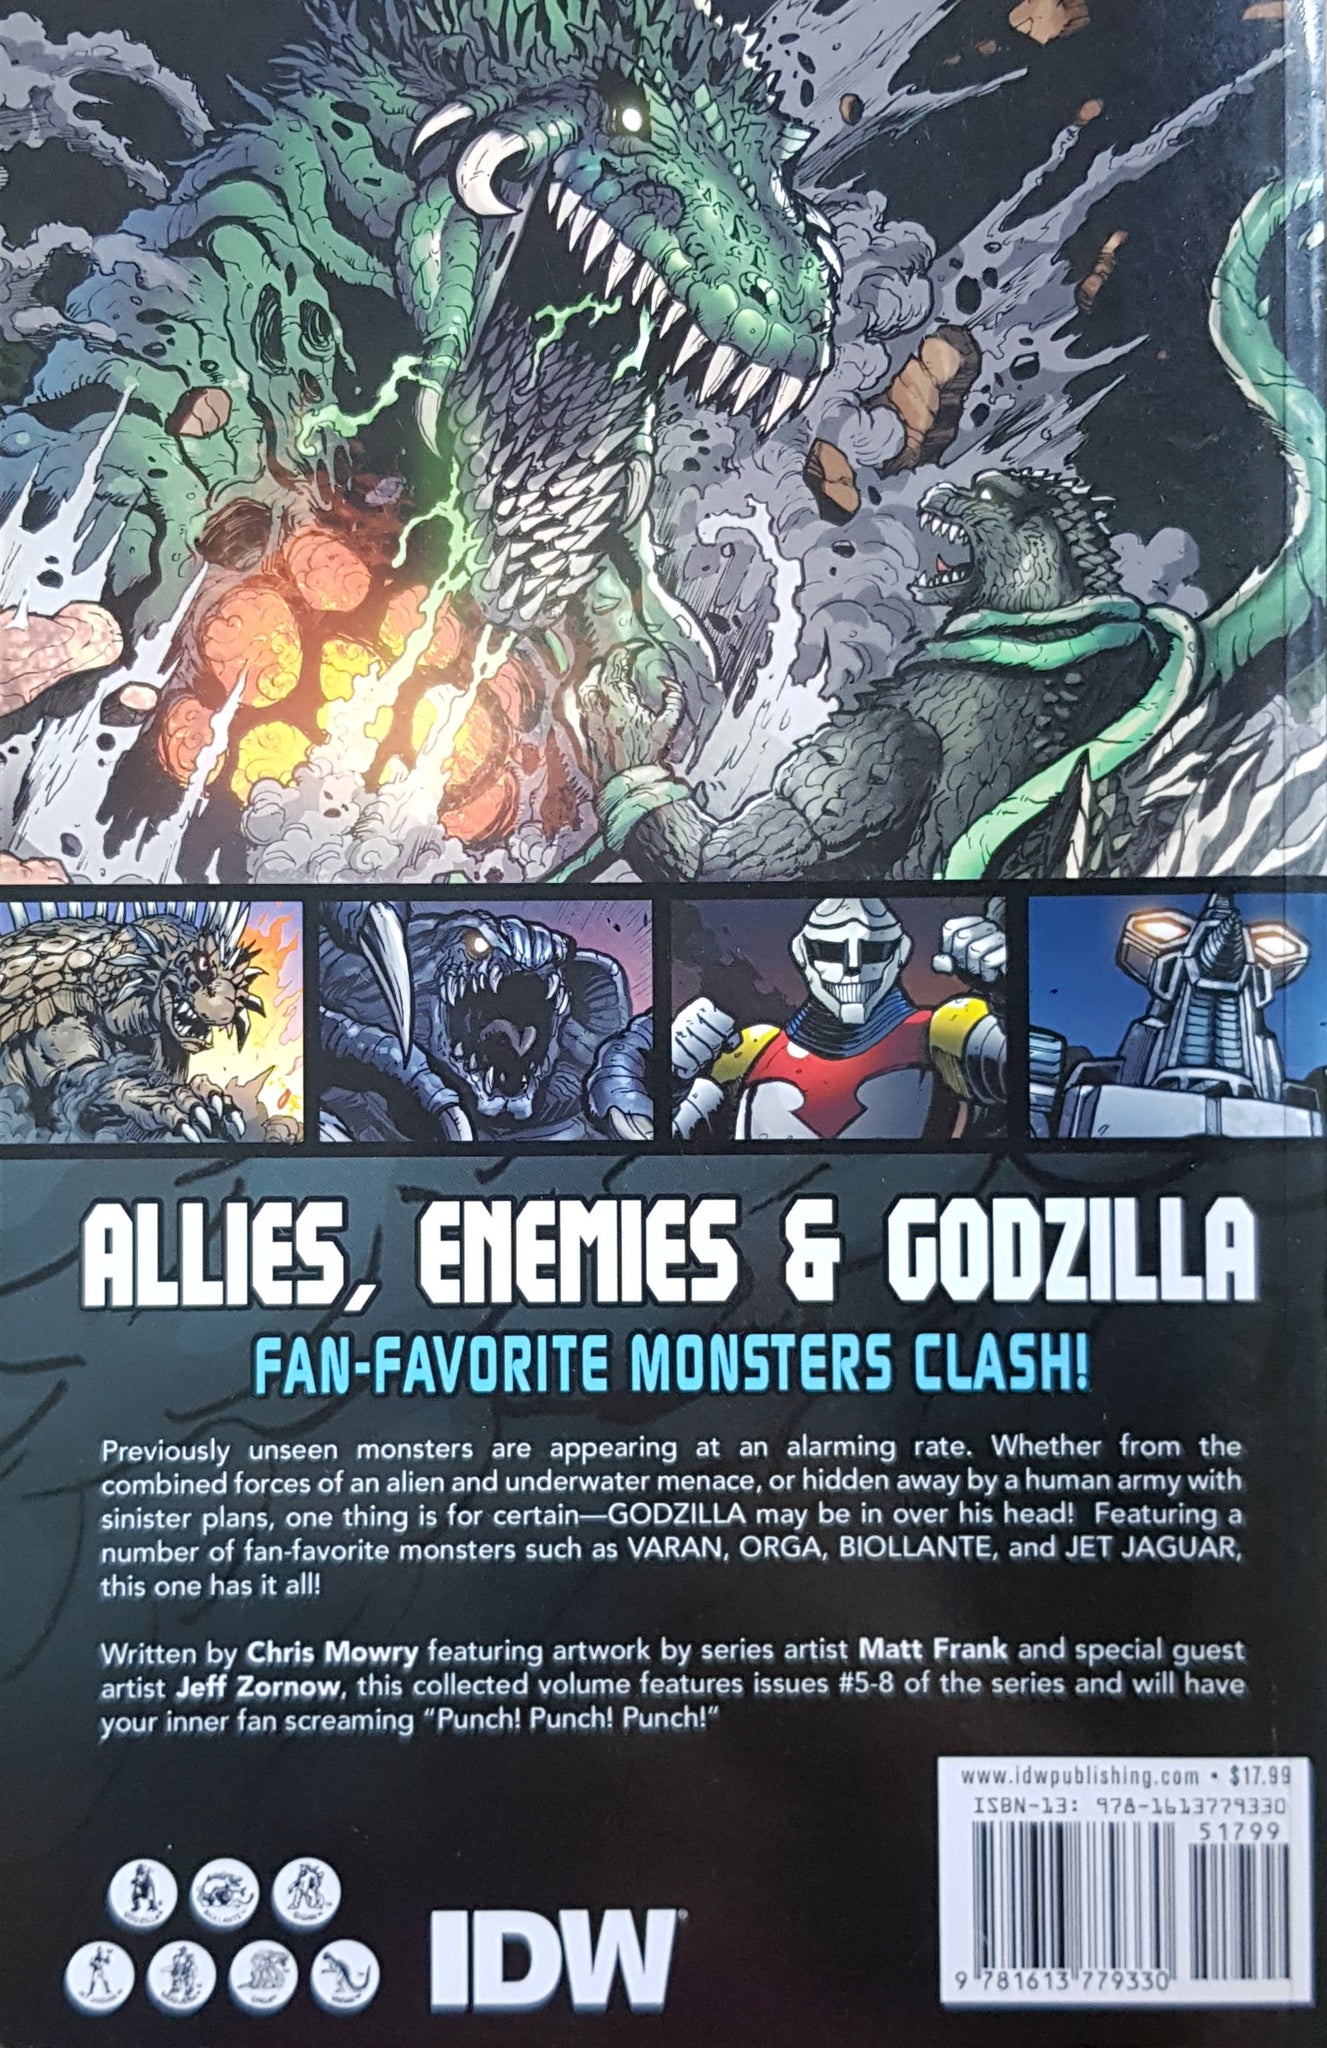 Godzilla: Complete Rulers of Earth Volume 2